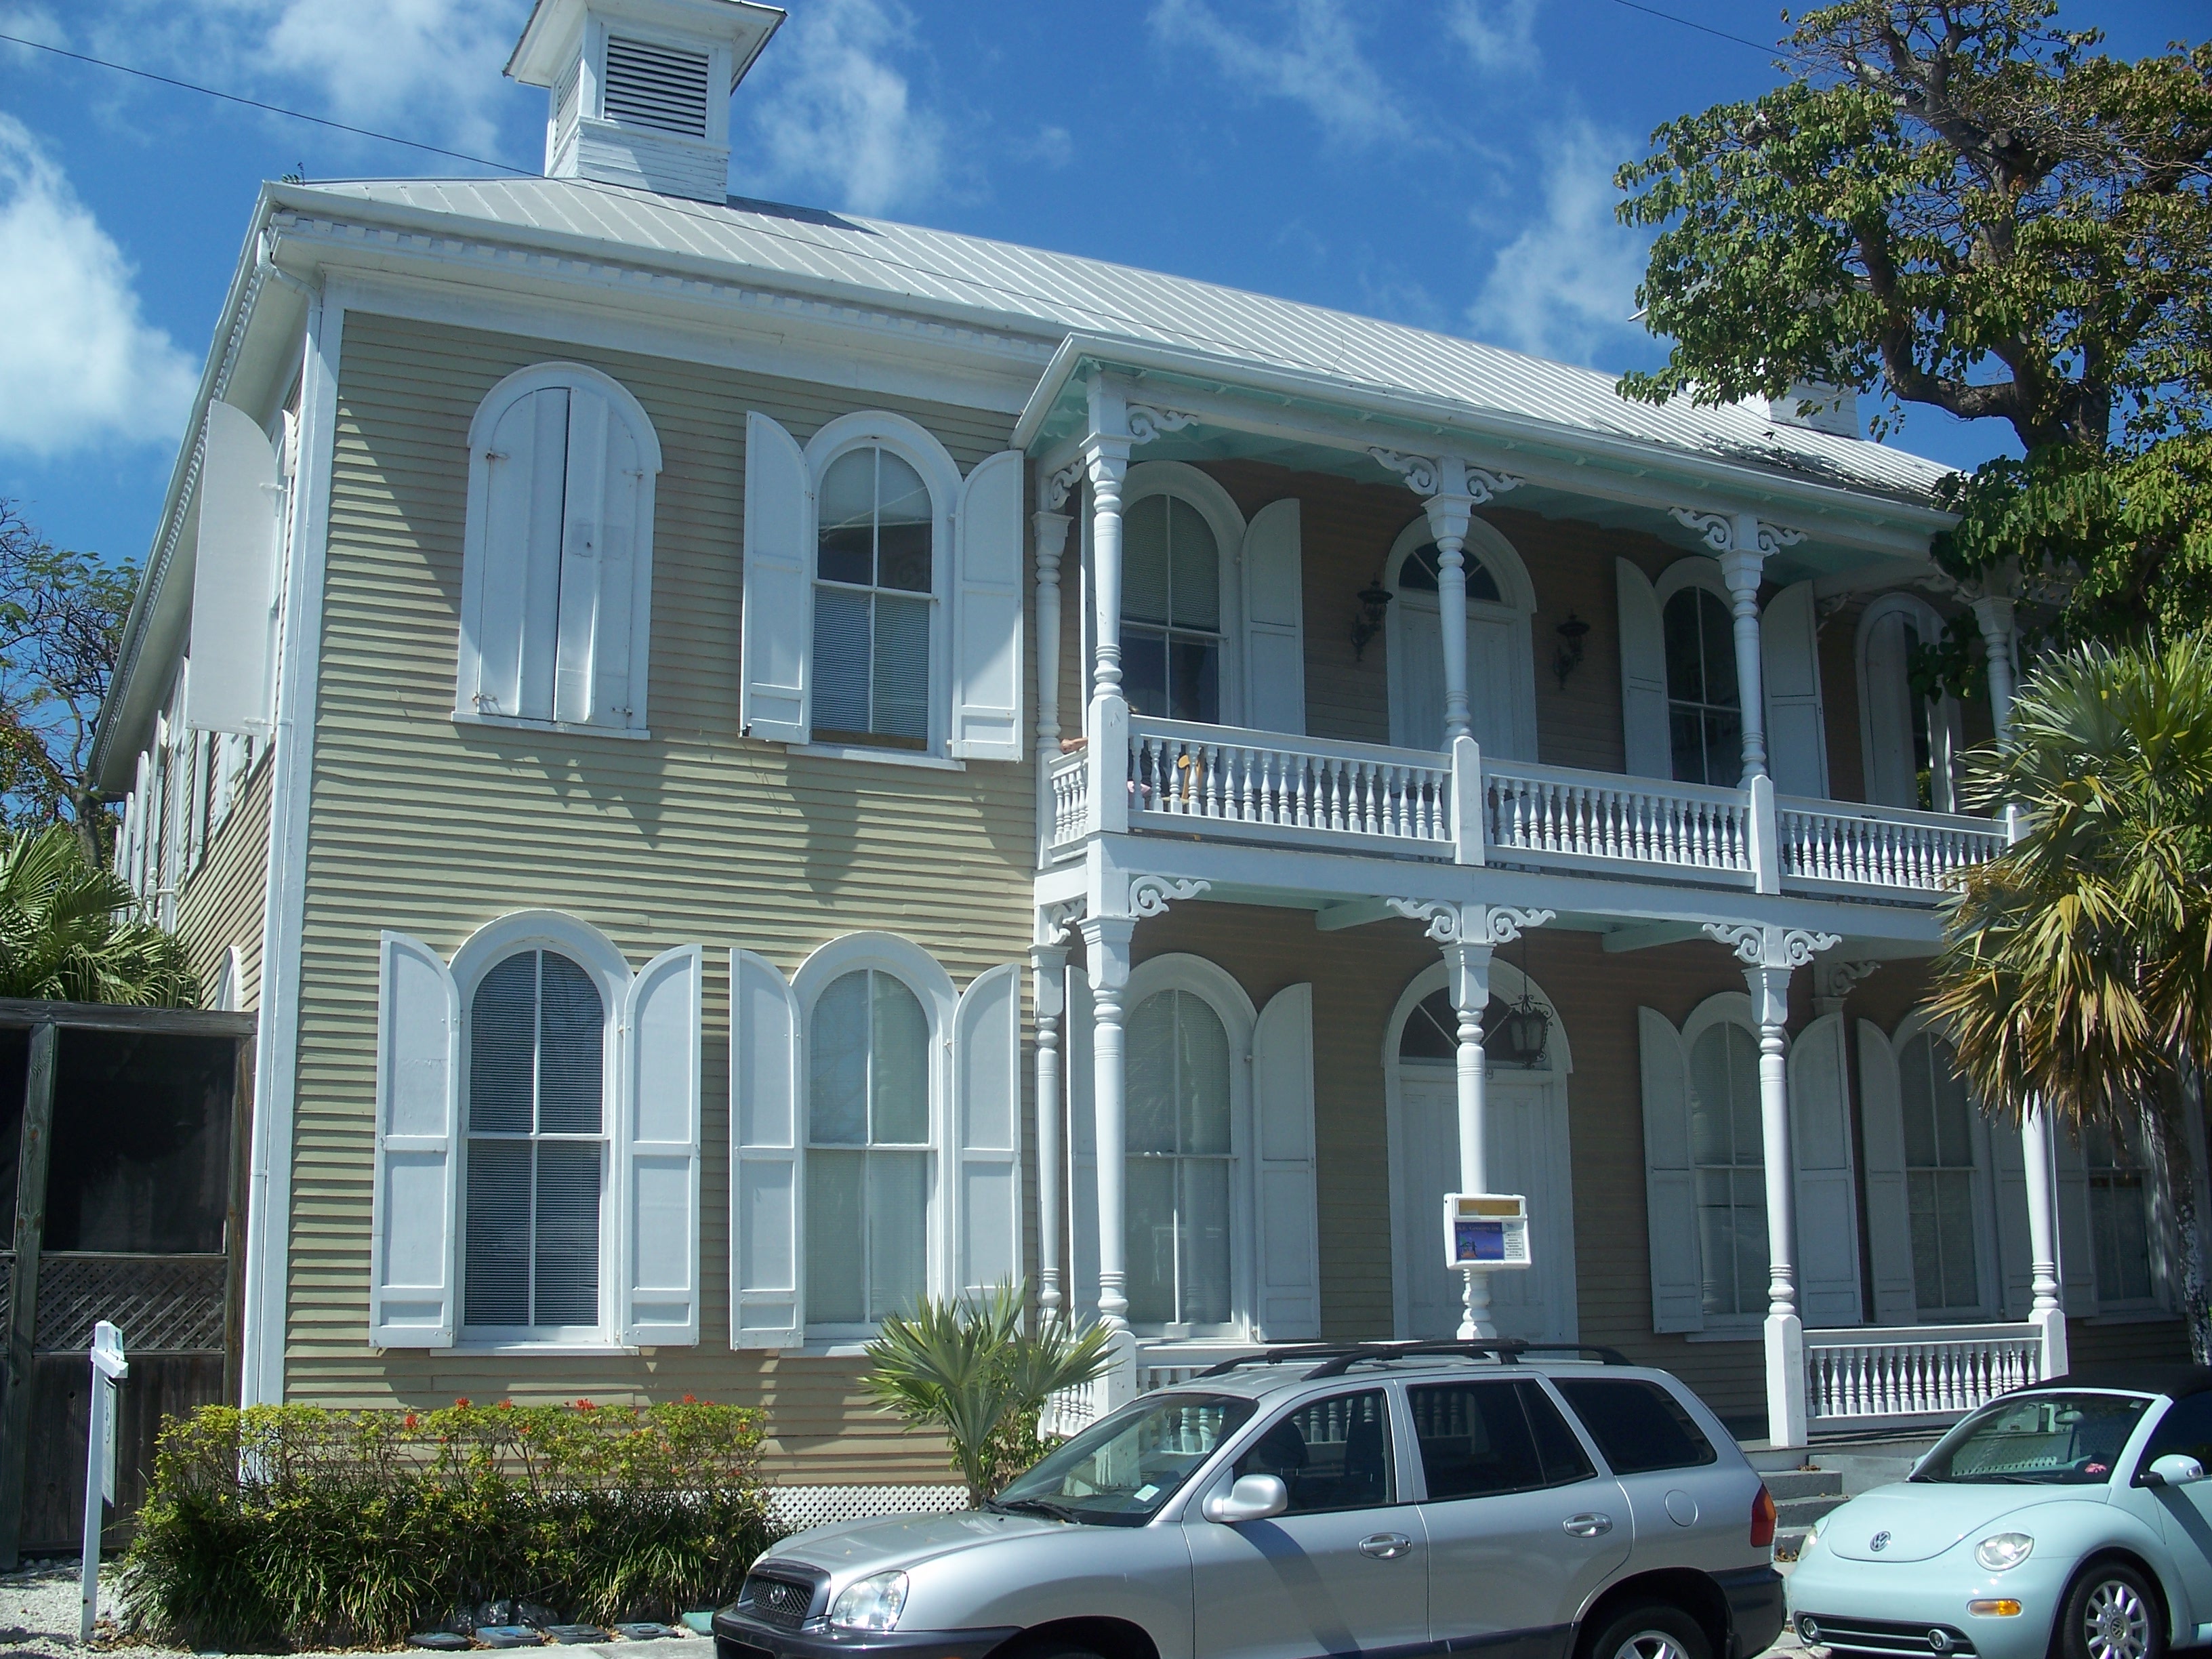 Gato House Key West Florida former hospital ghosts haunted